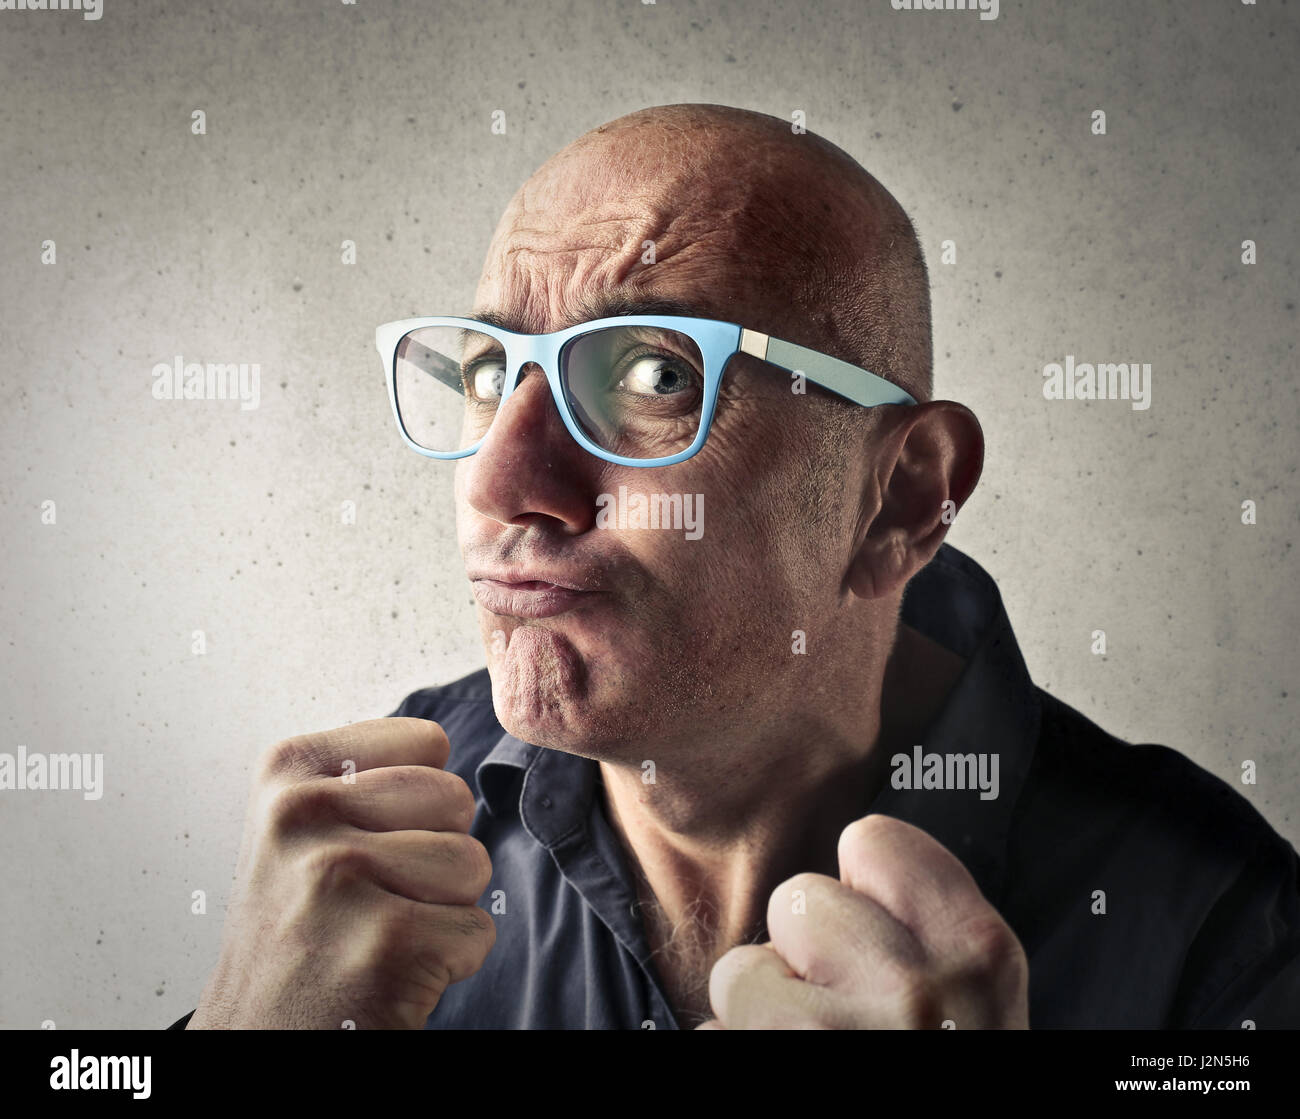 Bald man being agressive Stock Photo